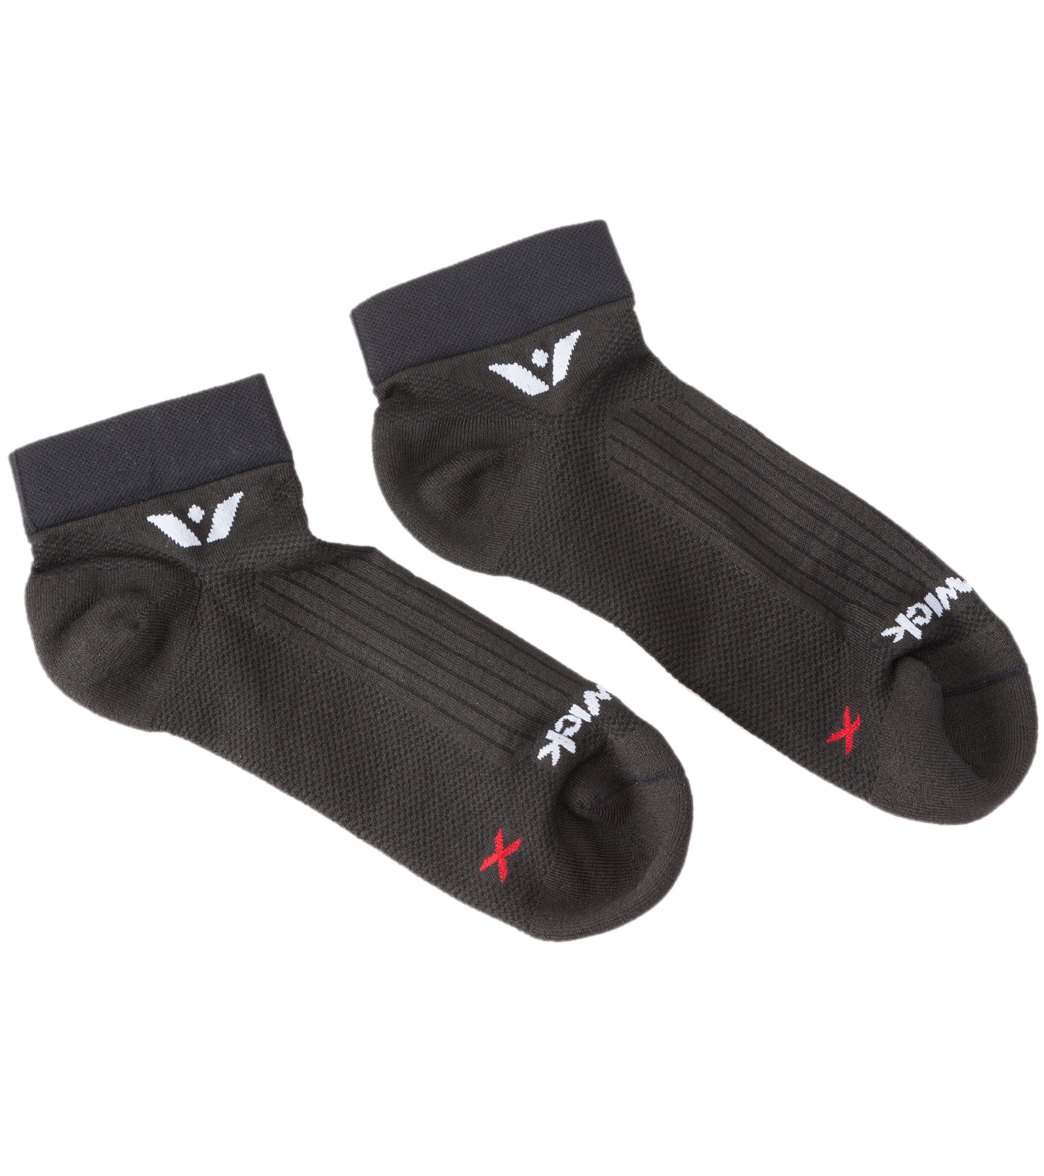 Swiftwick Aspire One Run Socks - Black Medium - Swimoutlet.com